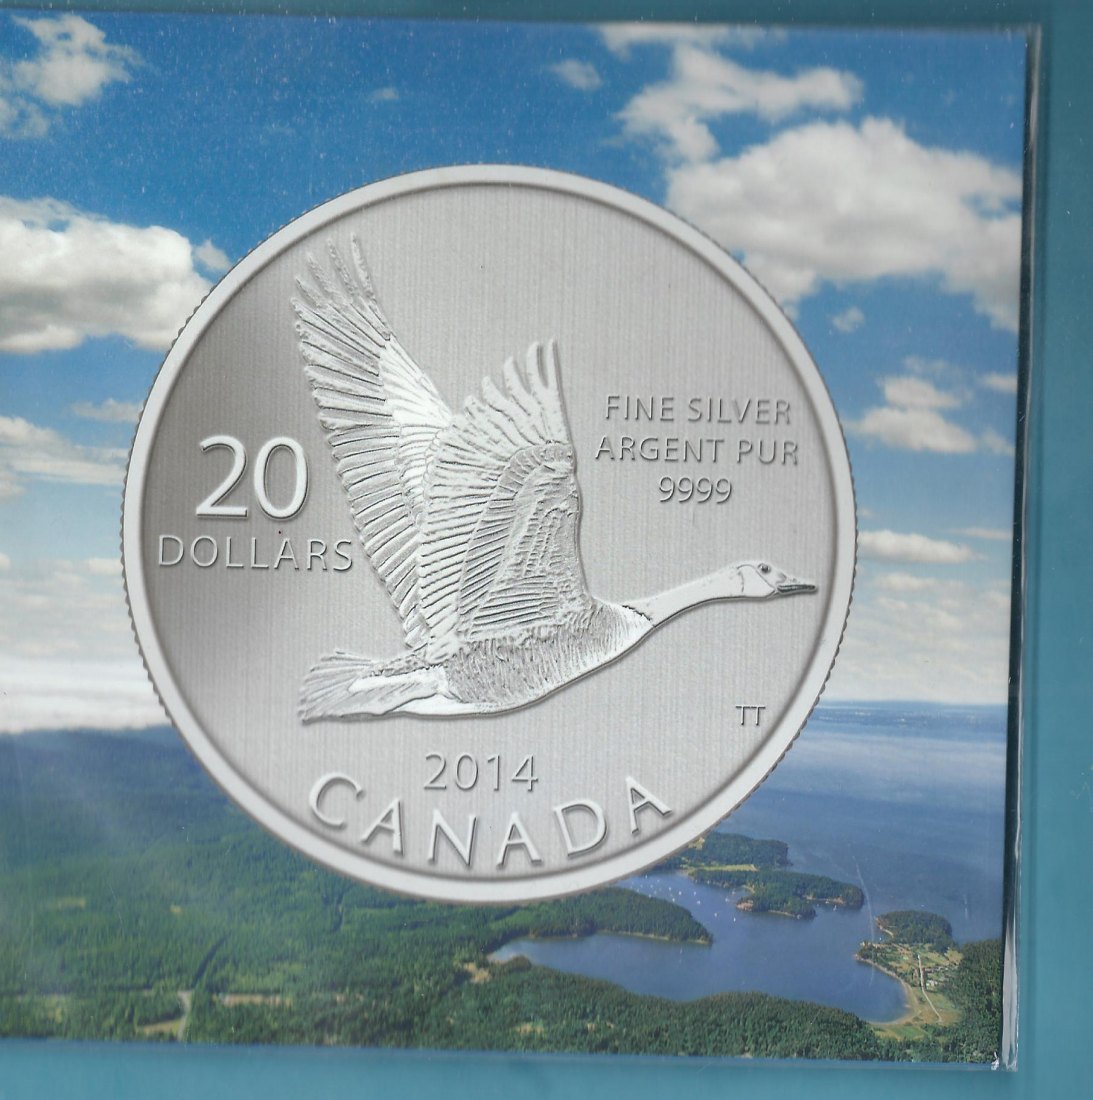  Kanada 20 Dollar 2014 OVP Silber Golden Gate Münzenankauf Koblenz Frank Maurer AC622   